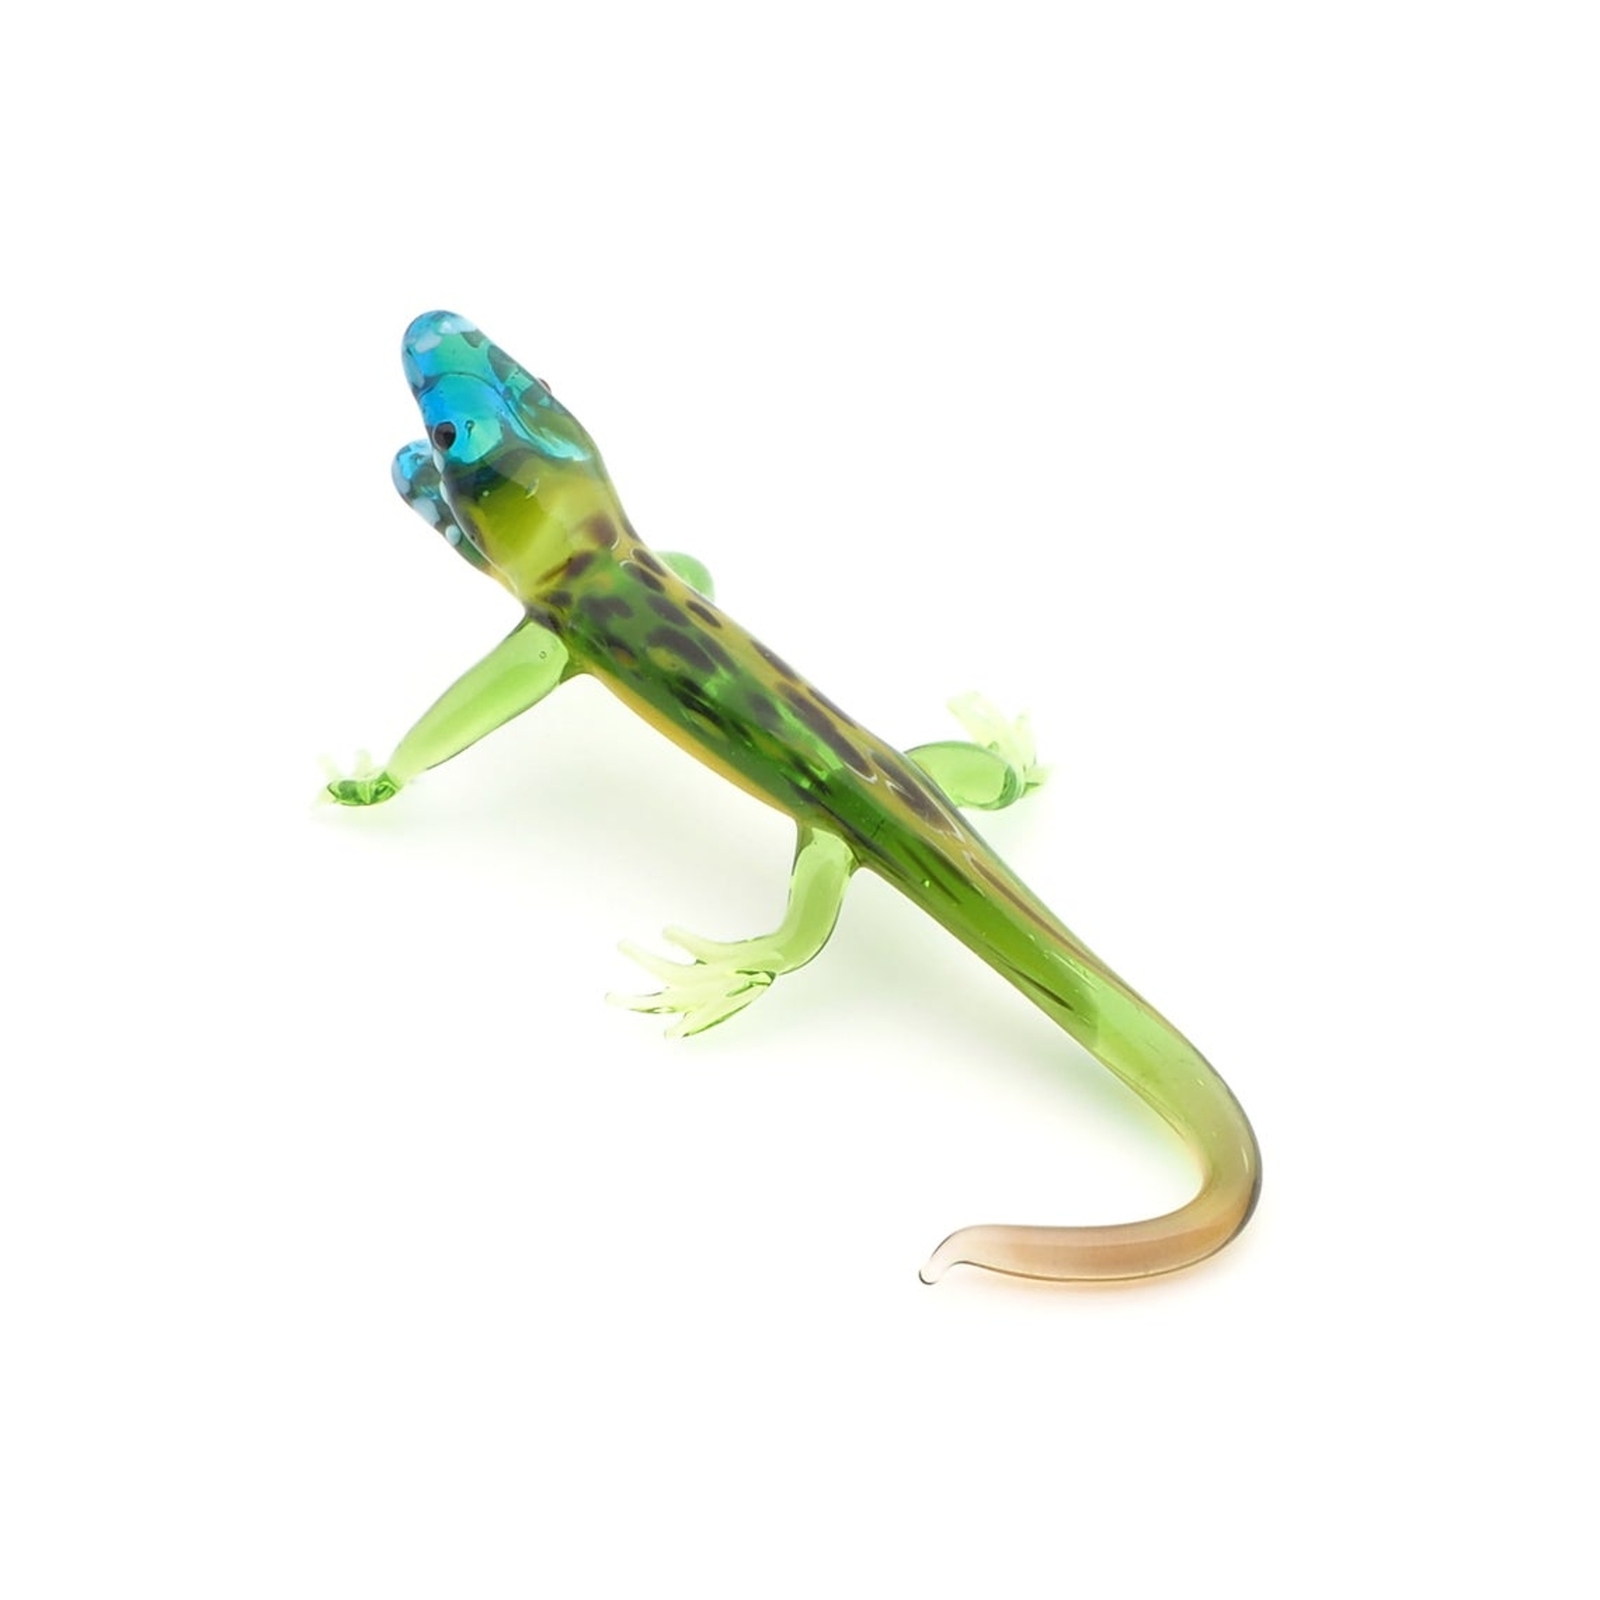 Czech handmade lampwork glass miniature lizard Iguana figurine ornament